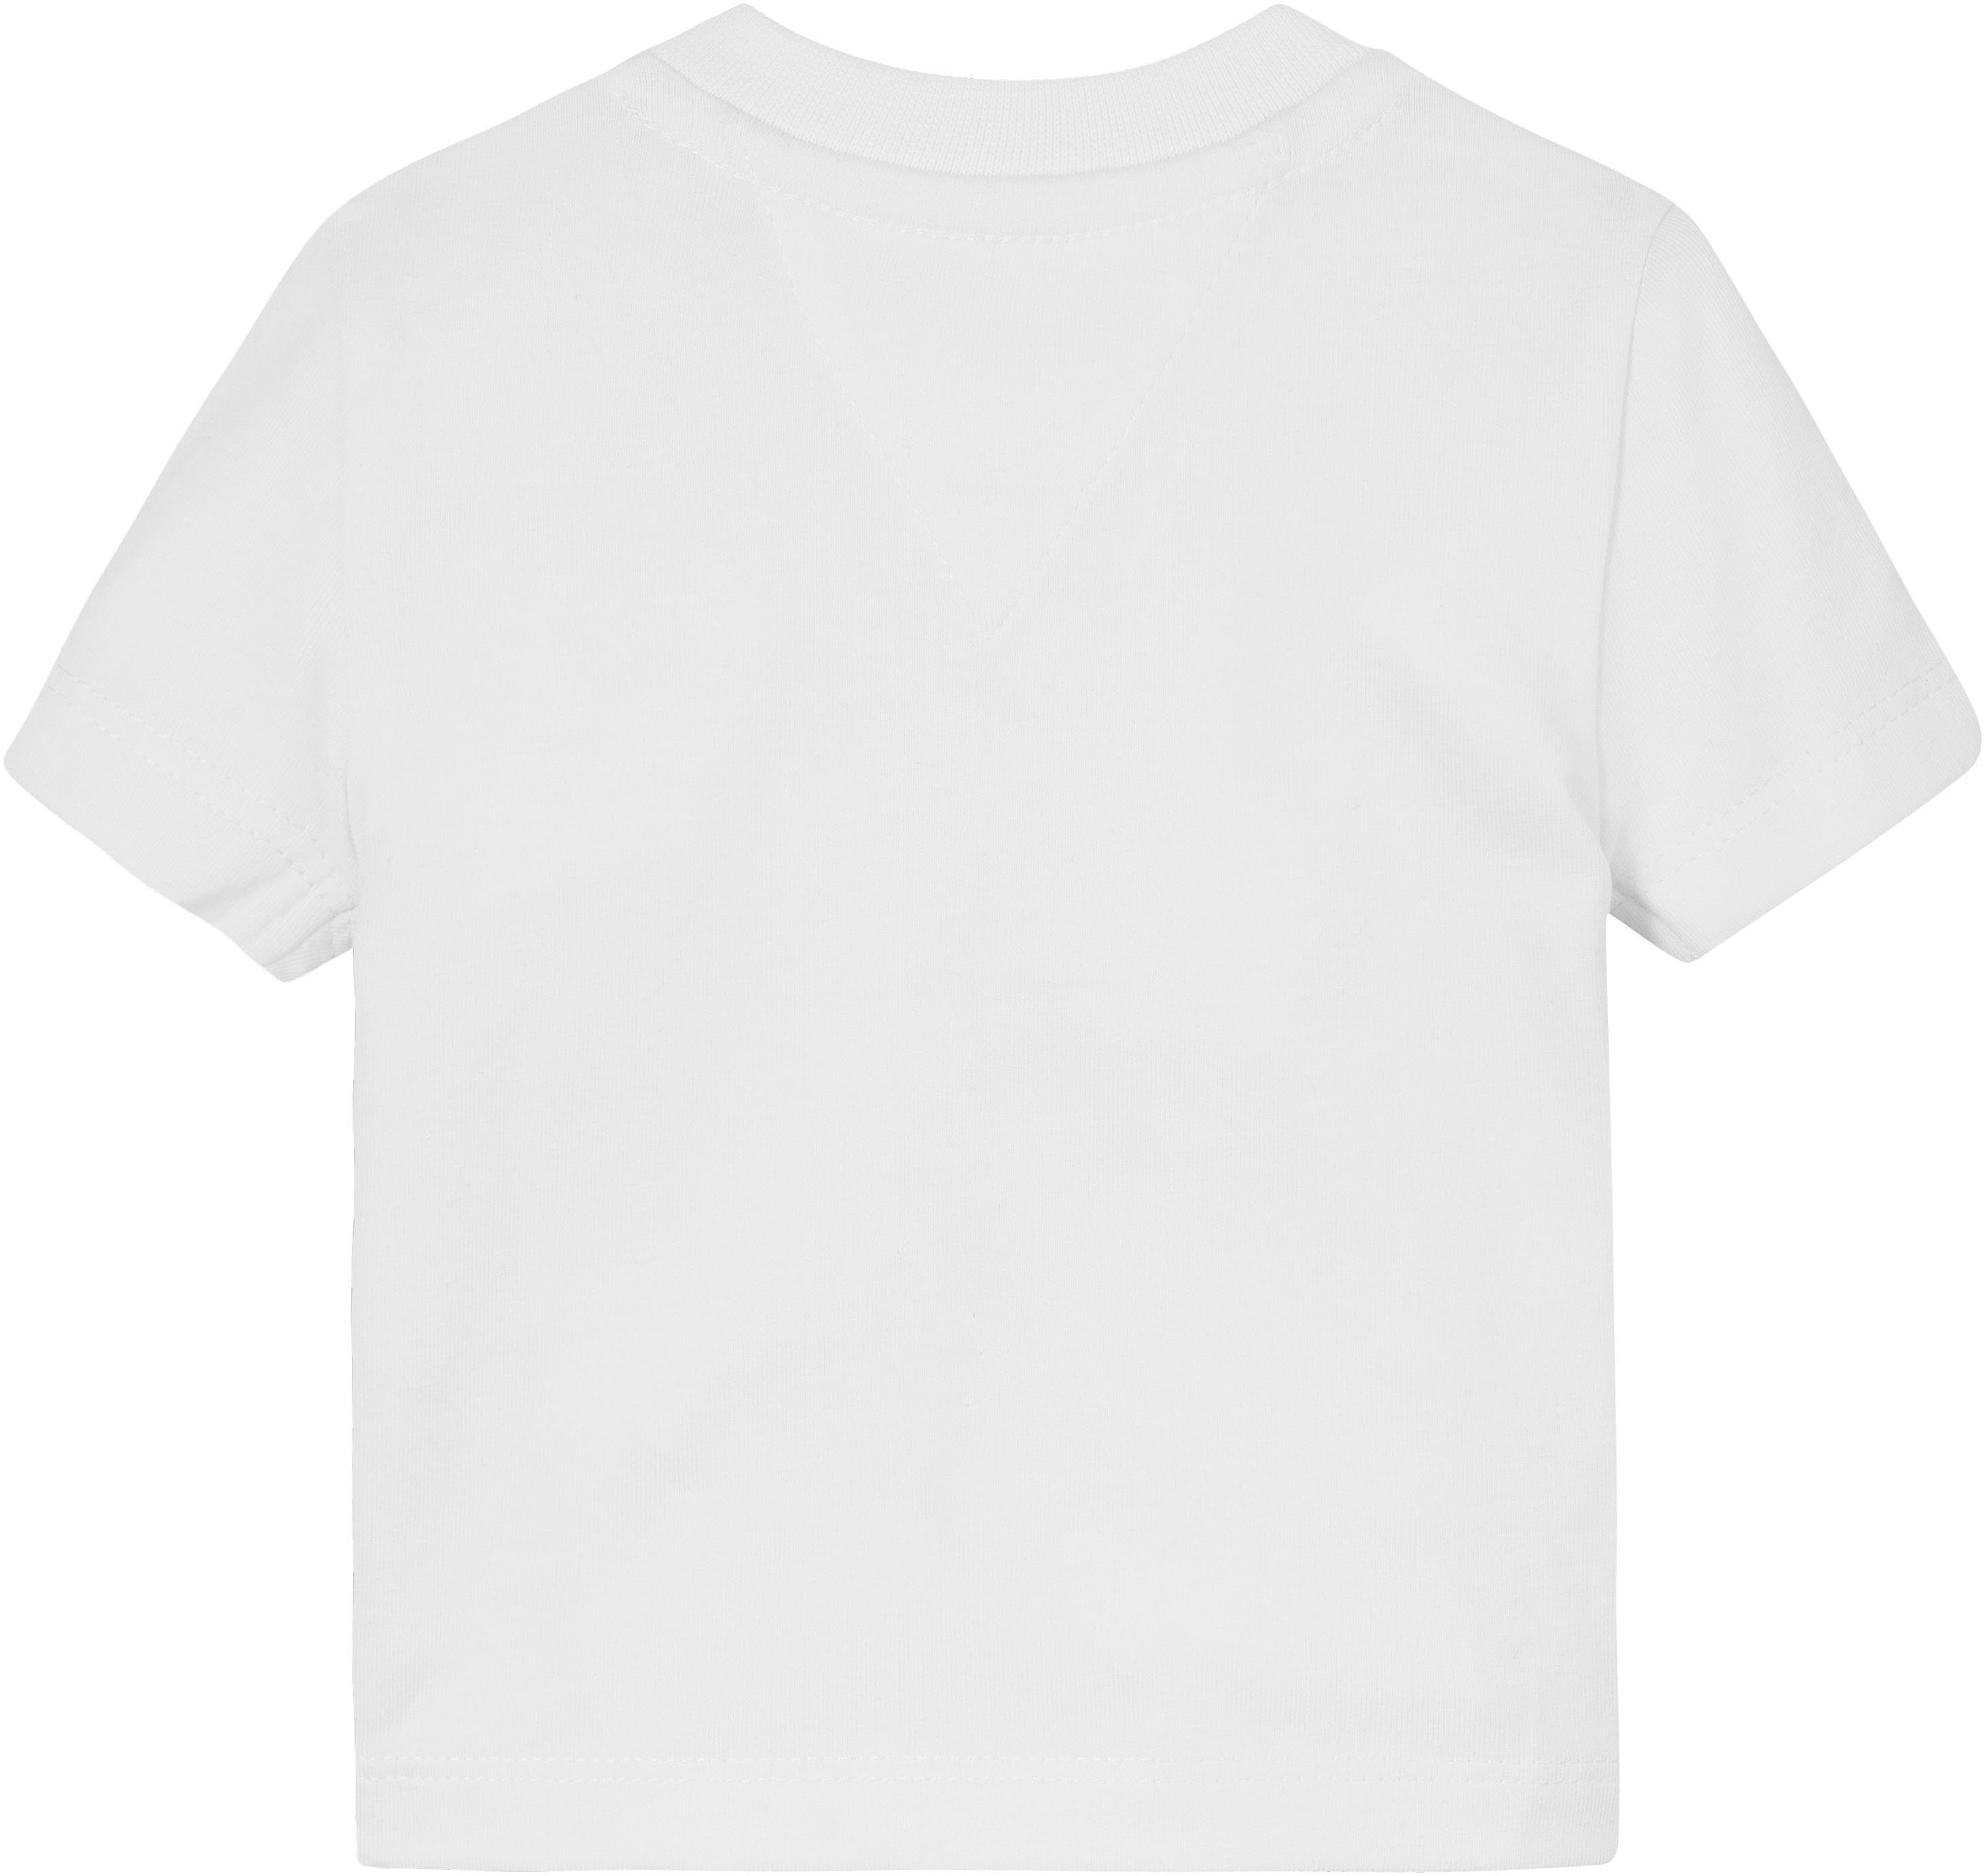 TH Tommy Logo LOGO Hilfiger T-Shirt mit großem S/S TEE BABY White